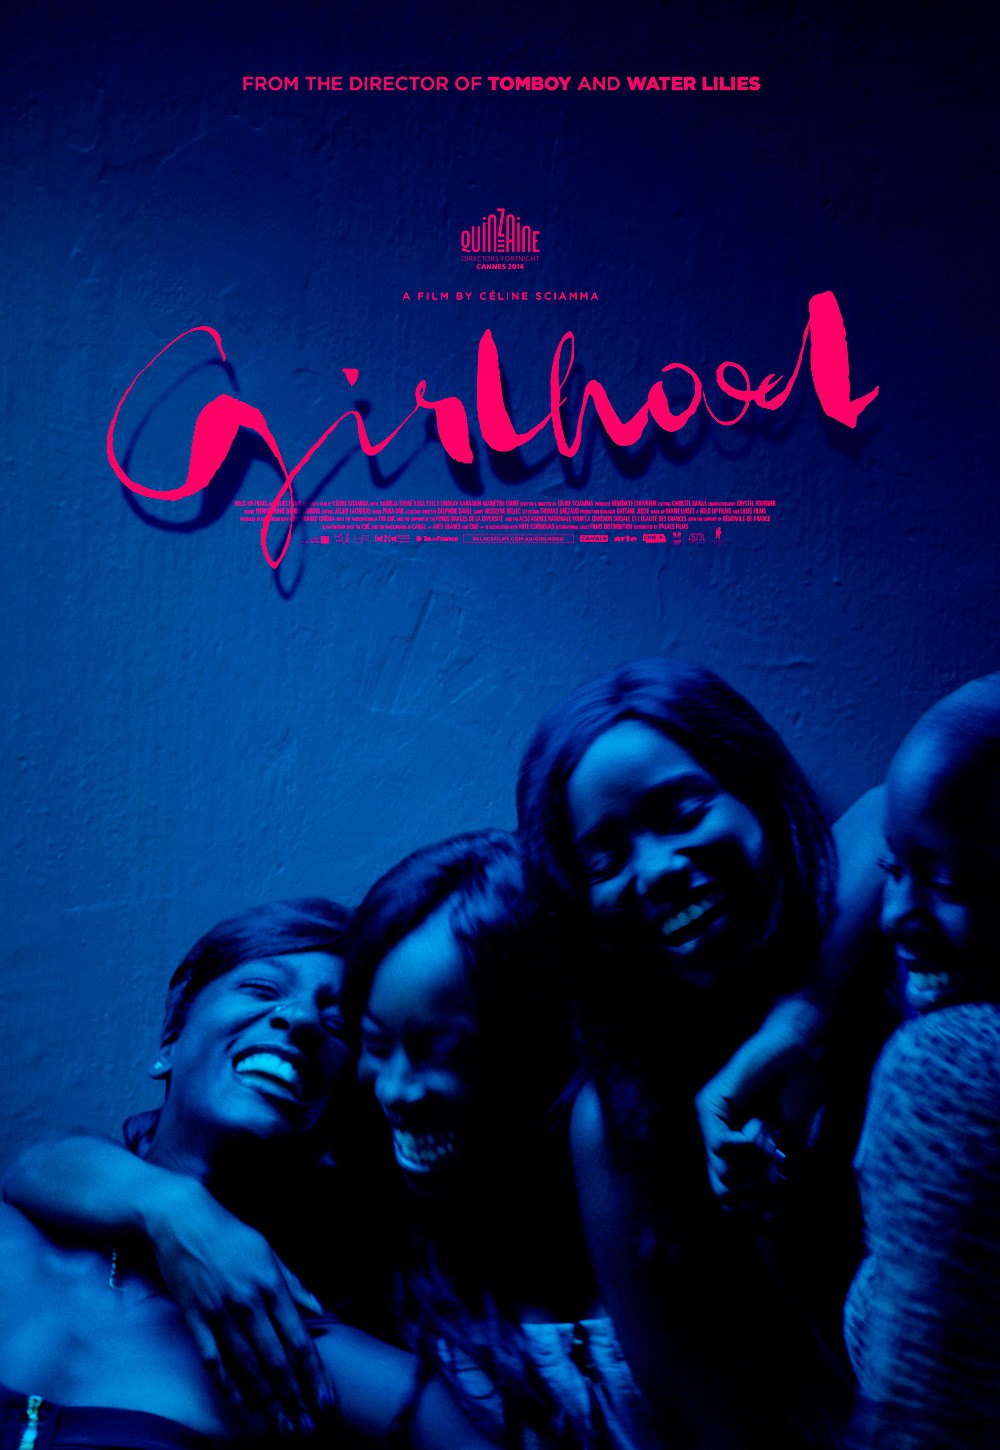 Extra Large Movie Poster Image for Bande de filles (#4 of 4)